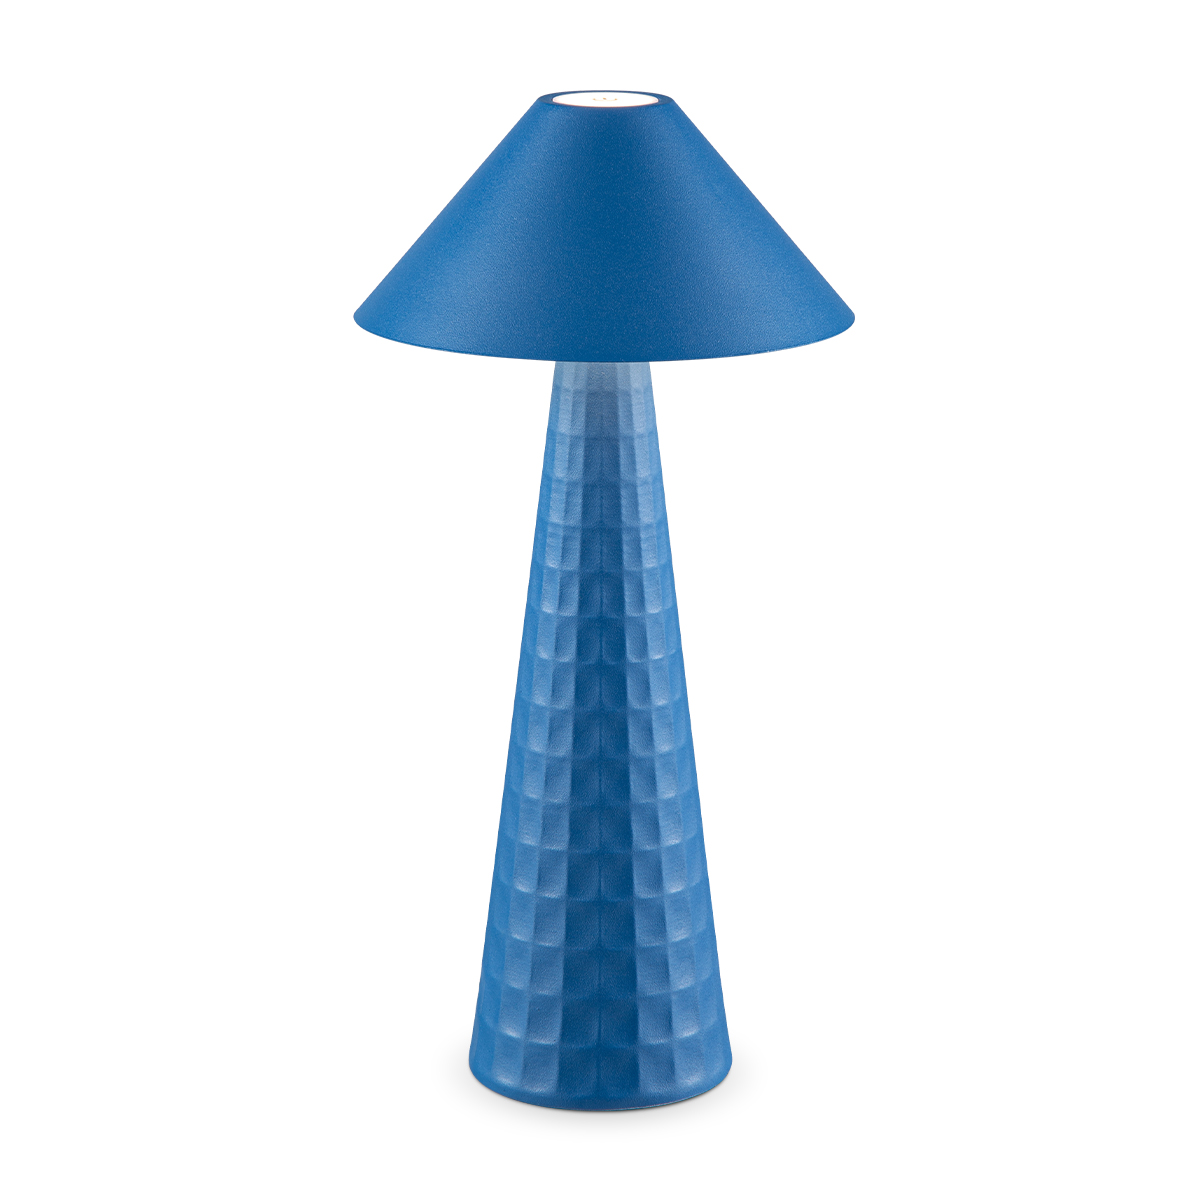 Tangla lighting - TLT7645-01BL - LED table lamp - rechargeable plastic and metal - blue - mushroom